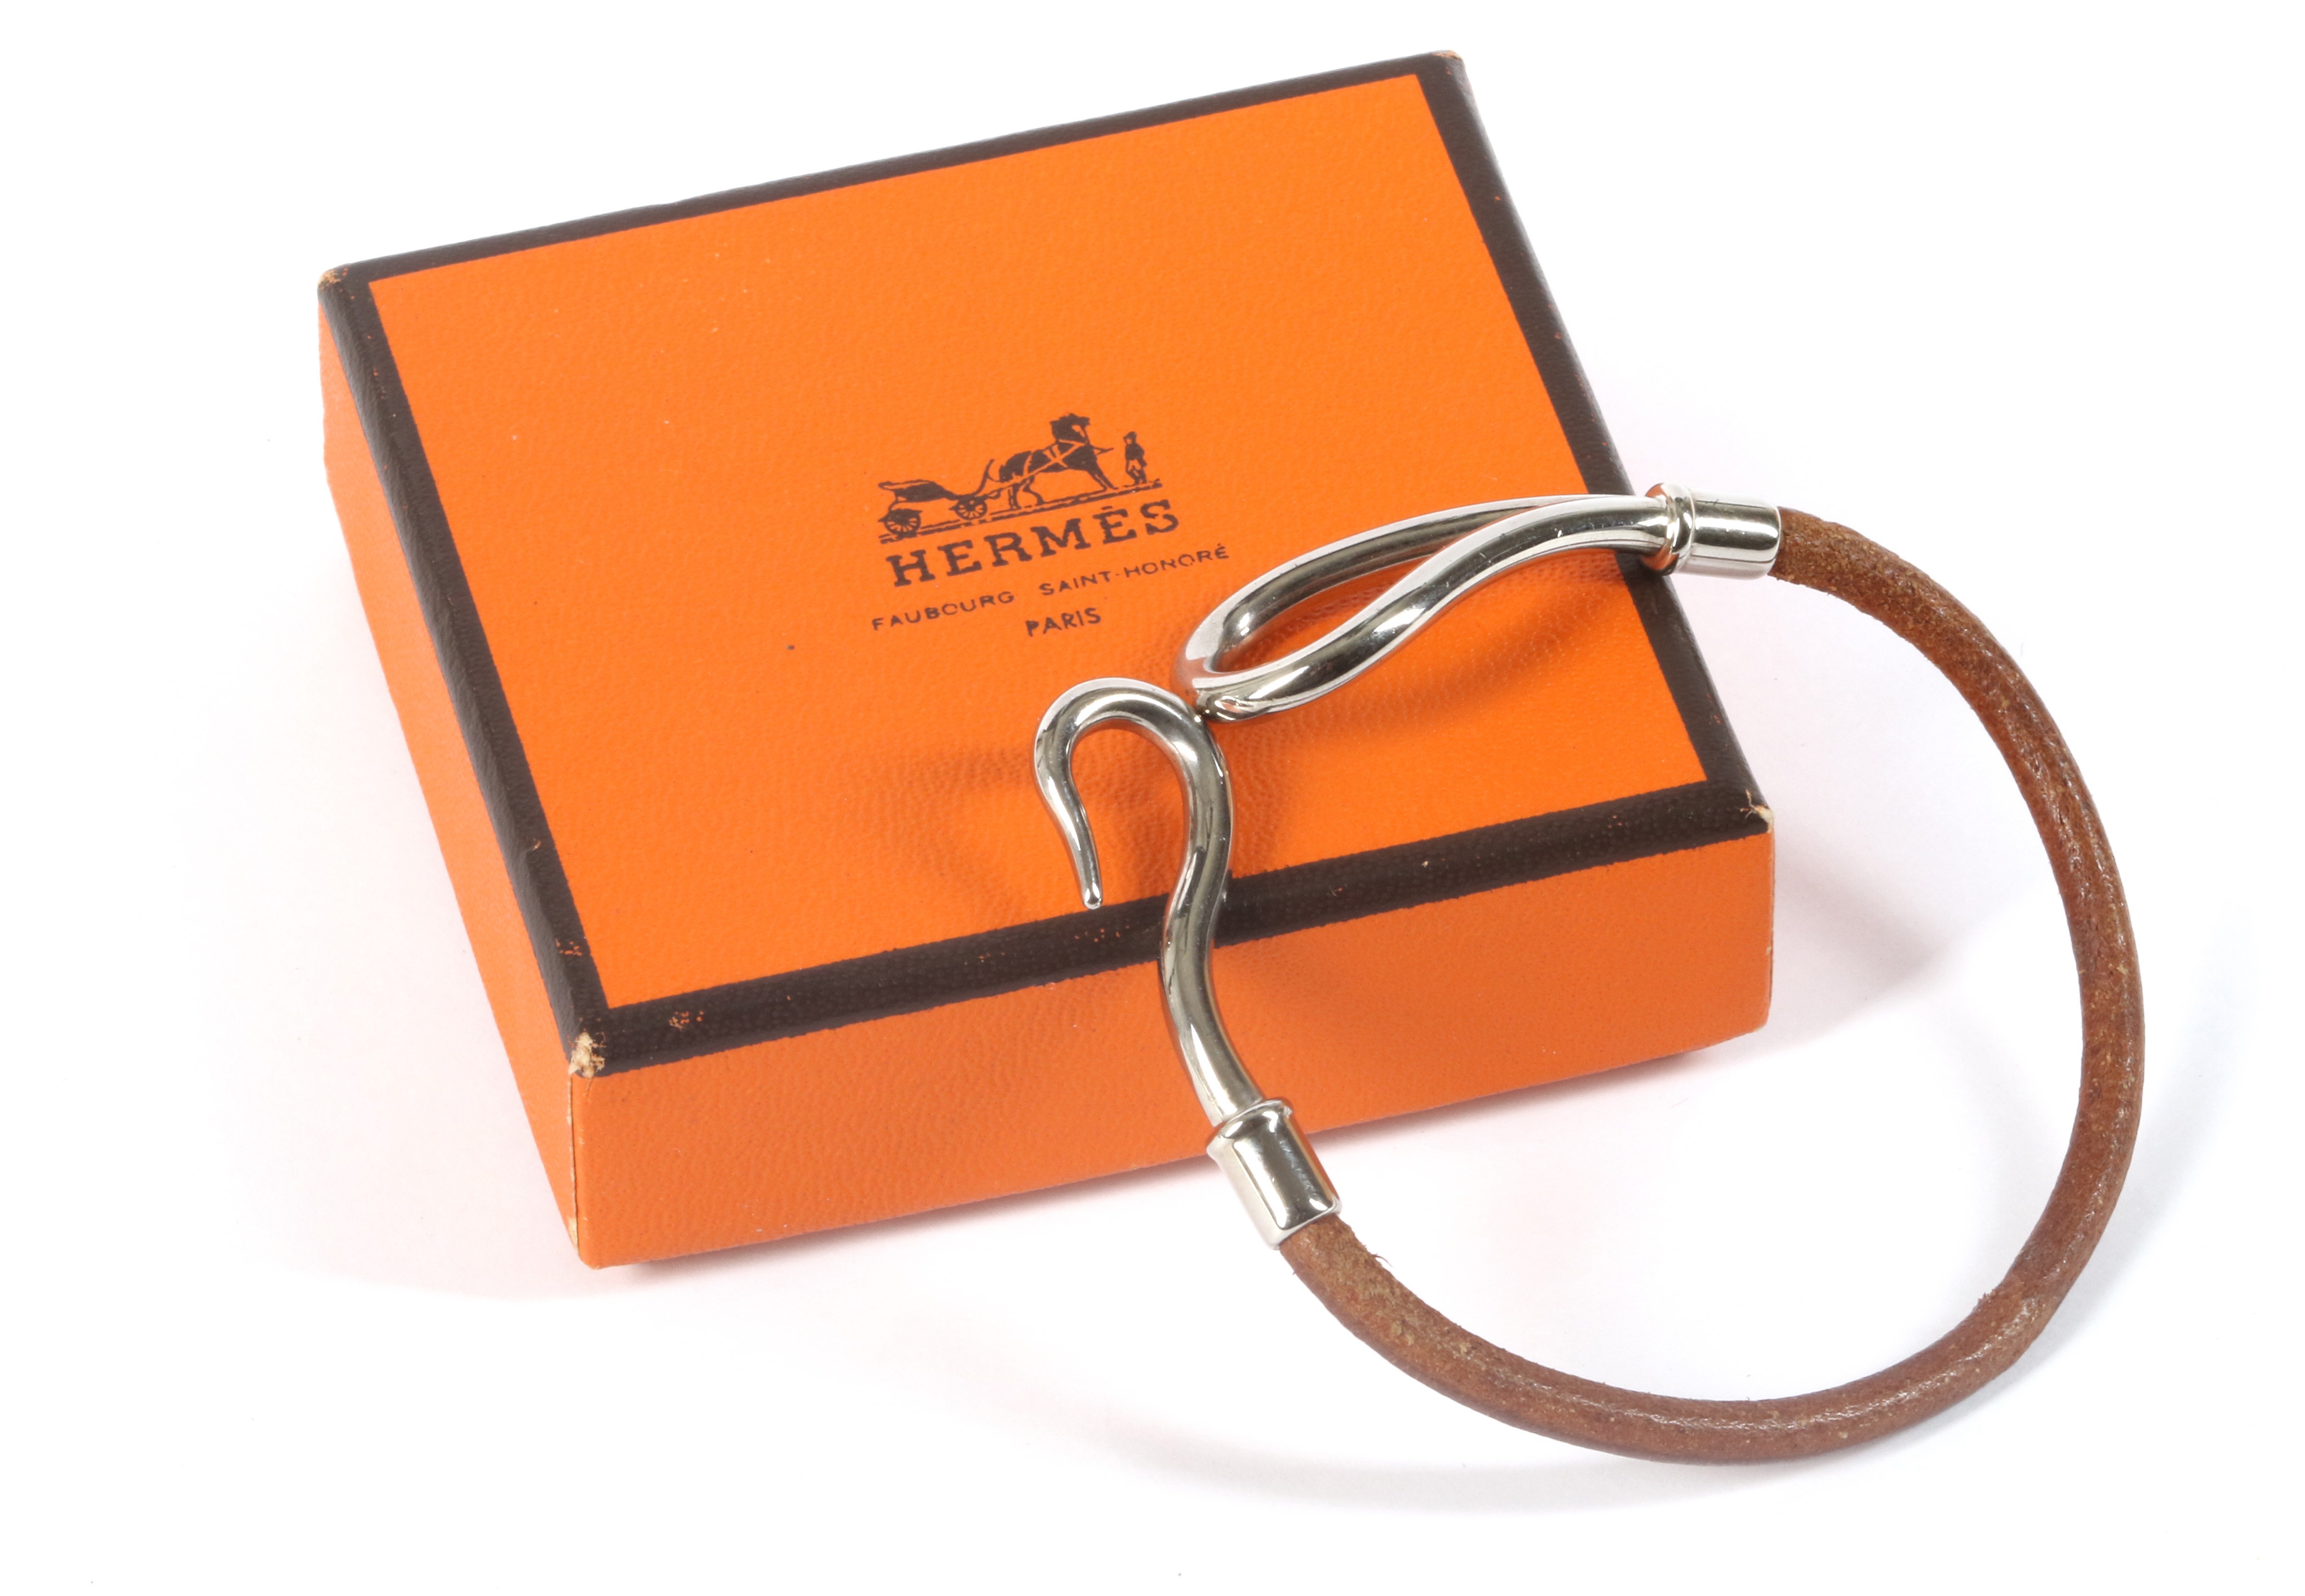 Hermes Jumbo Hook Leather Bracelet, brown leather cord with palladium hook closure, 5.5cm diameter - Image 3 of 3